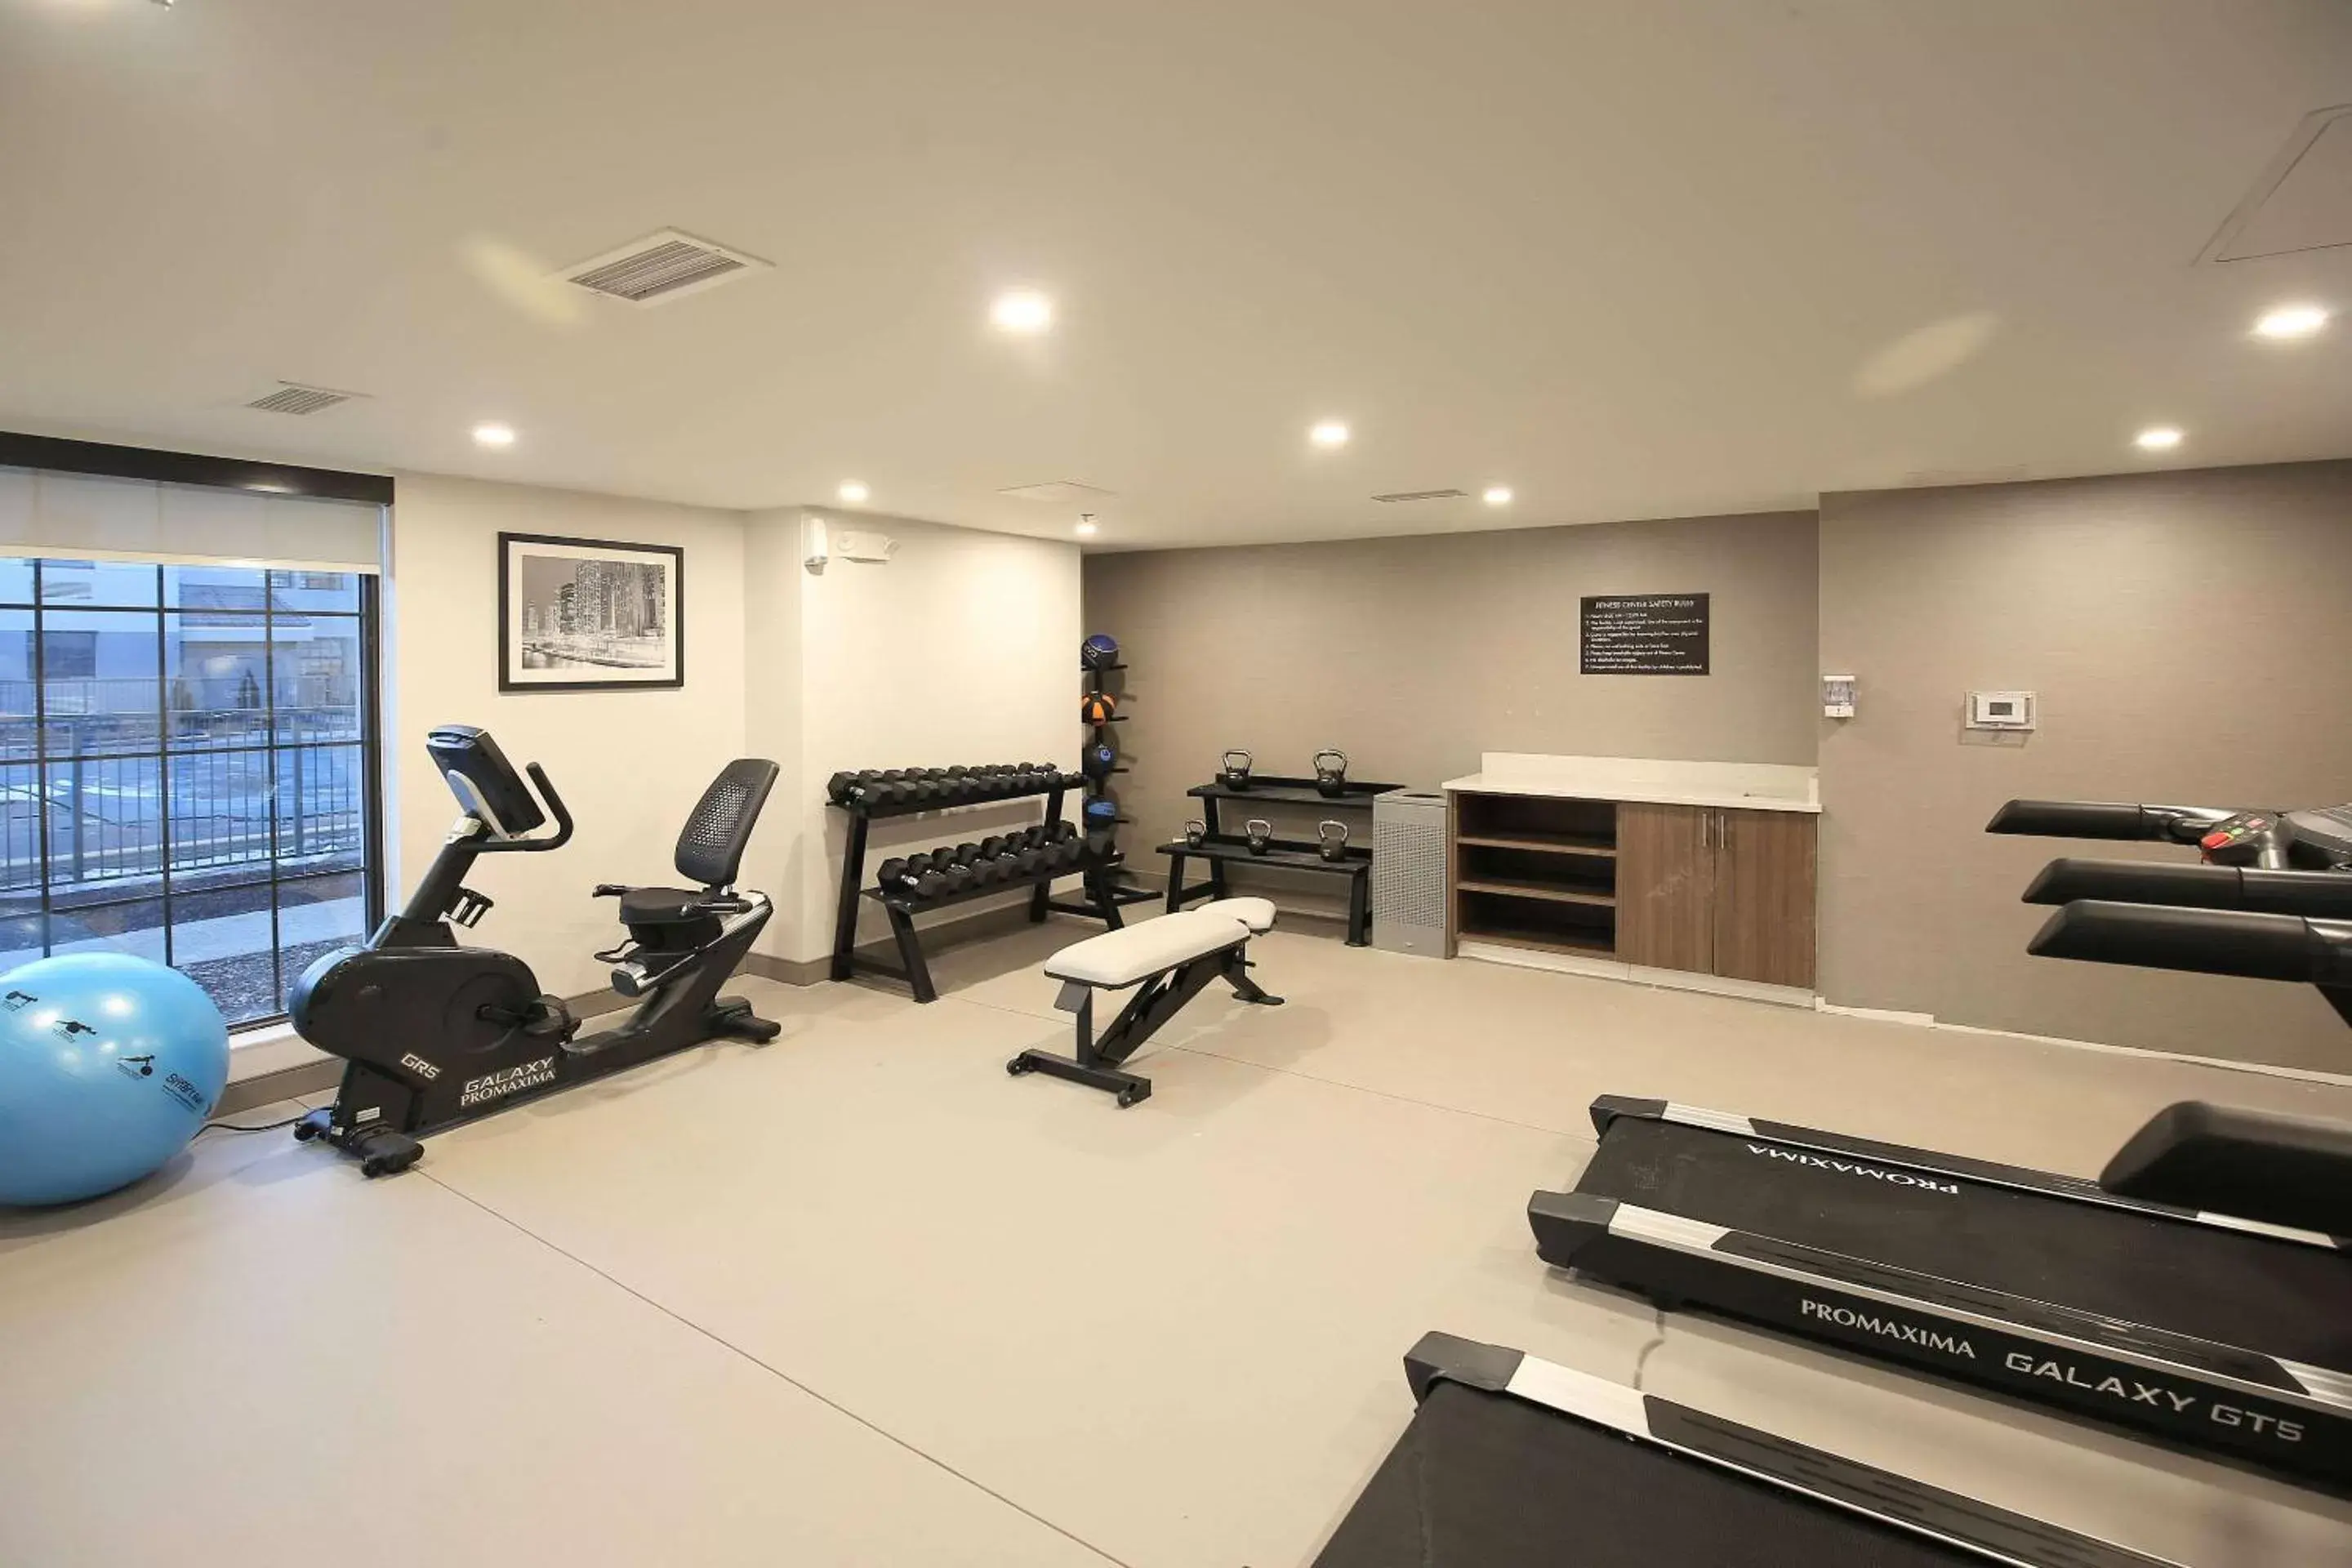 Fitness centre/facilities, Fitness Center/Facilities in Sleep Inn OakBrook Terrace - Chicago